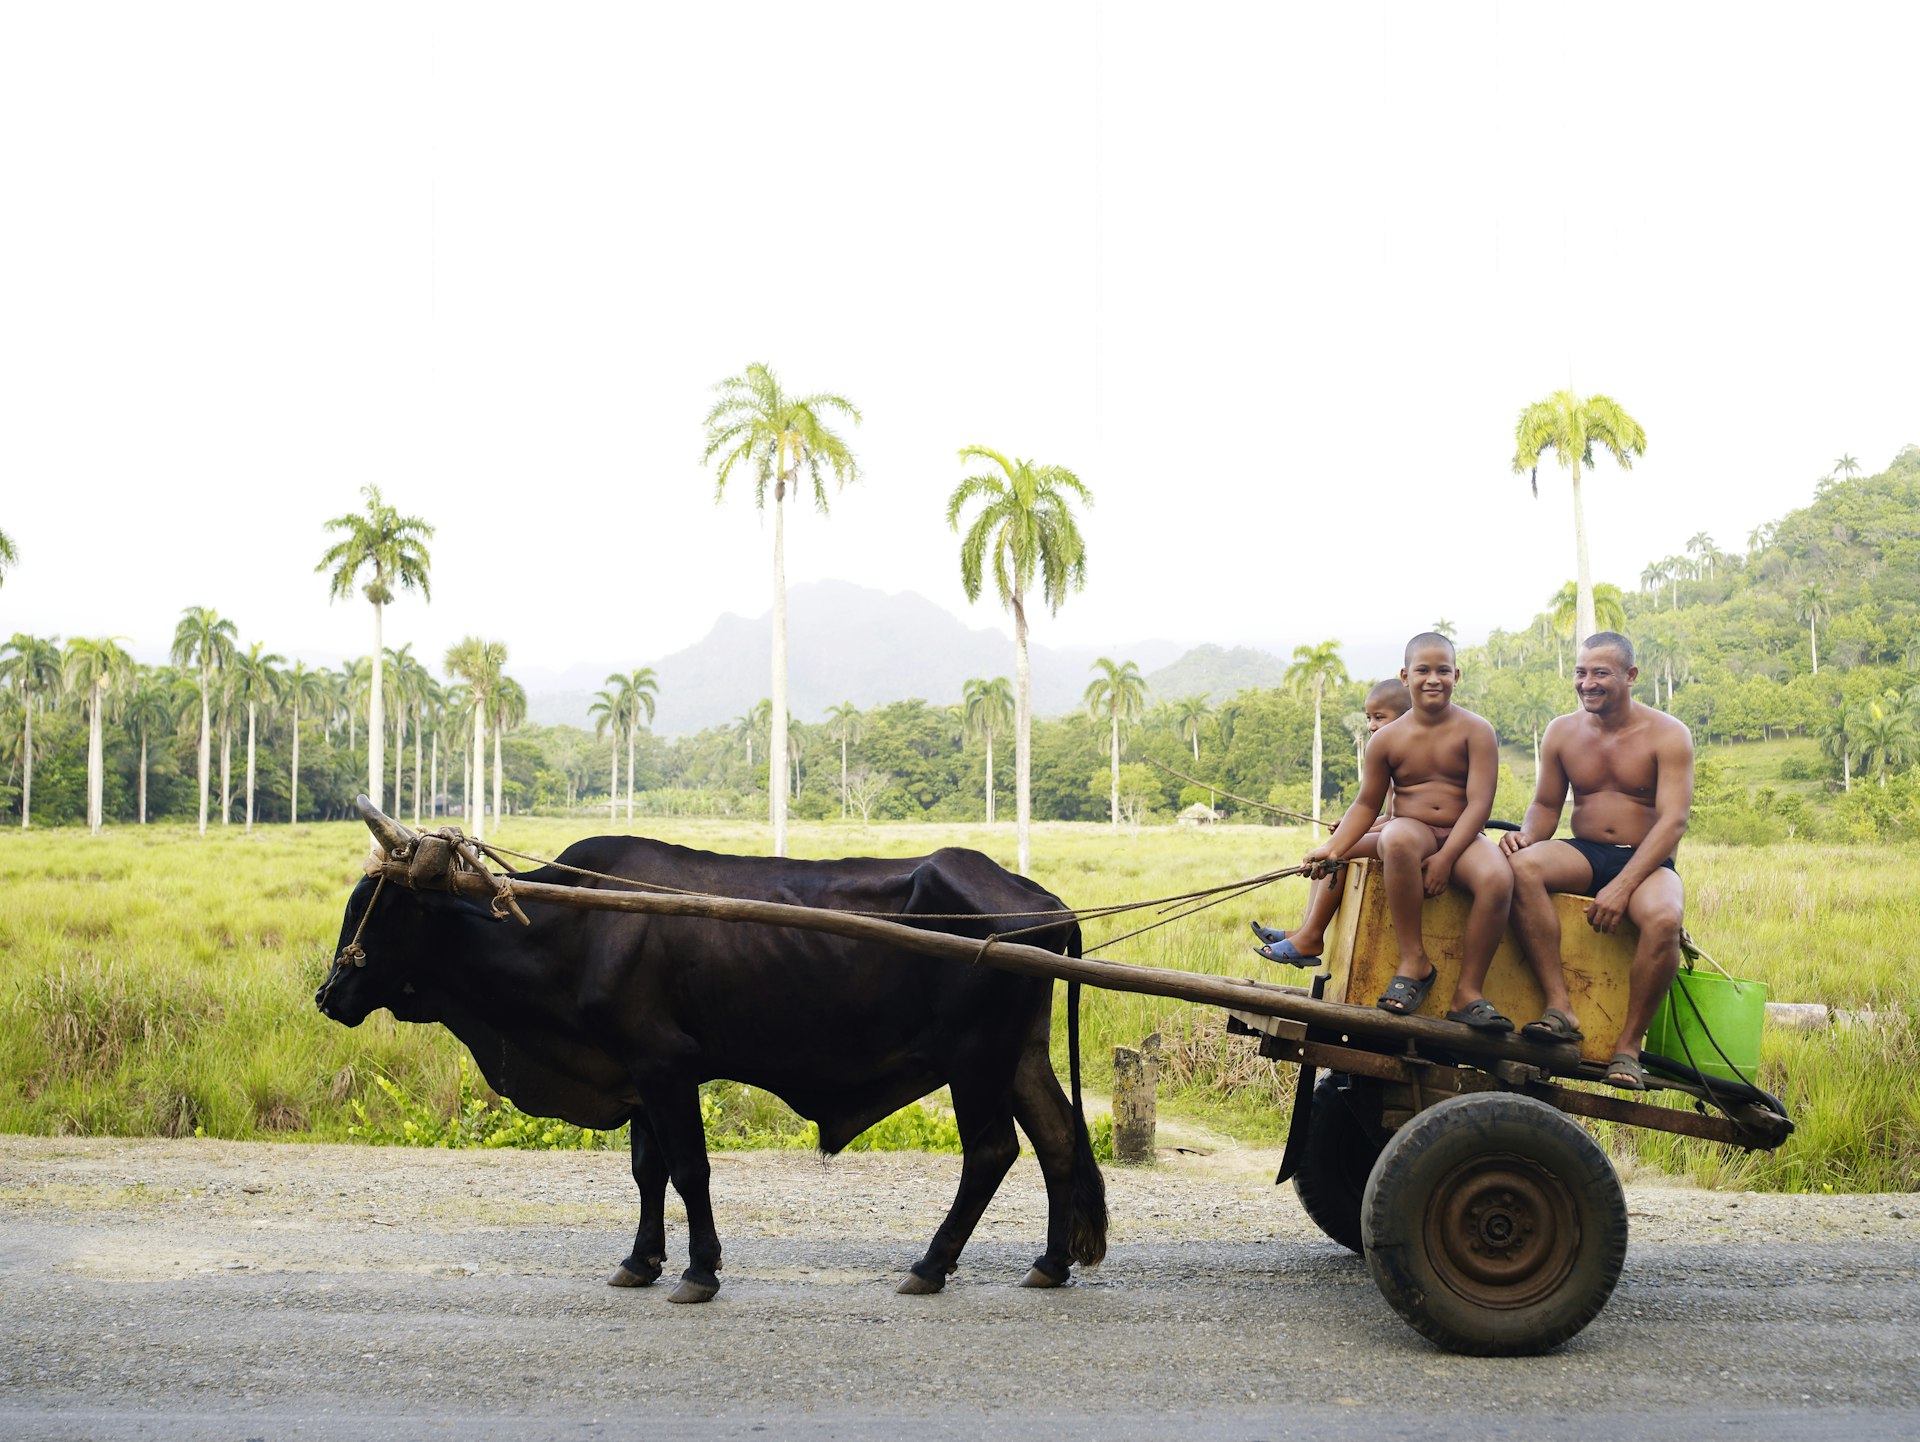 People riding on bullock cart on road between Santiago de Cuba and Baracoa, Cuba